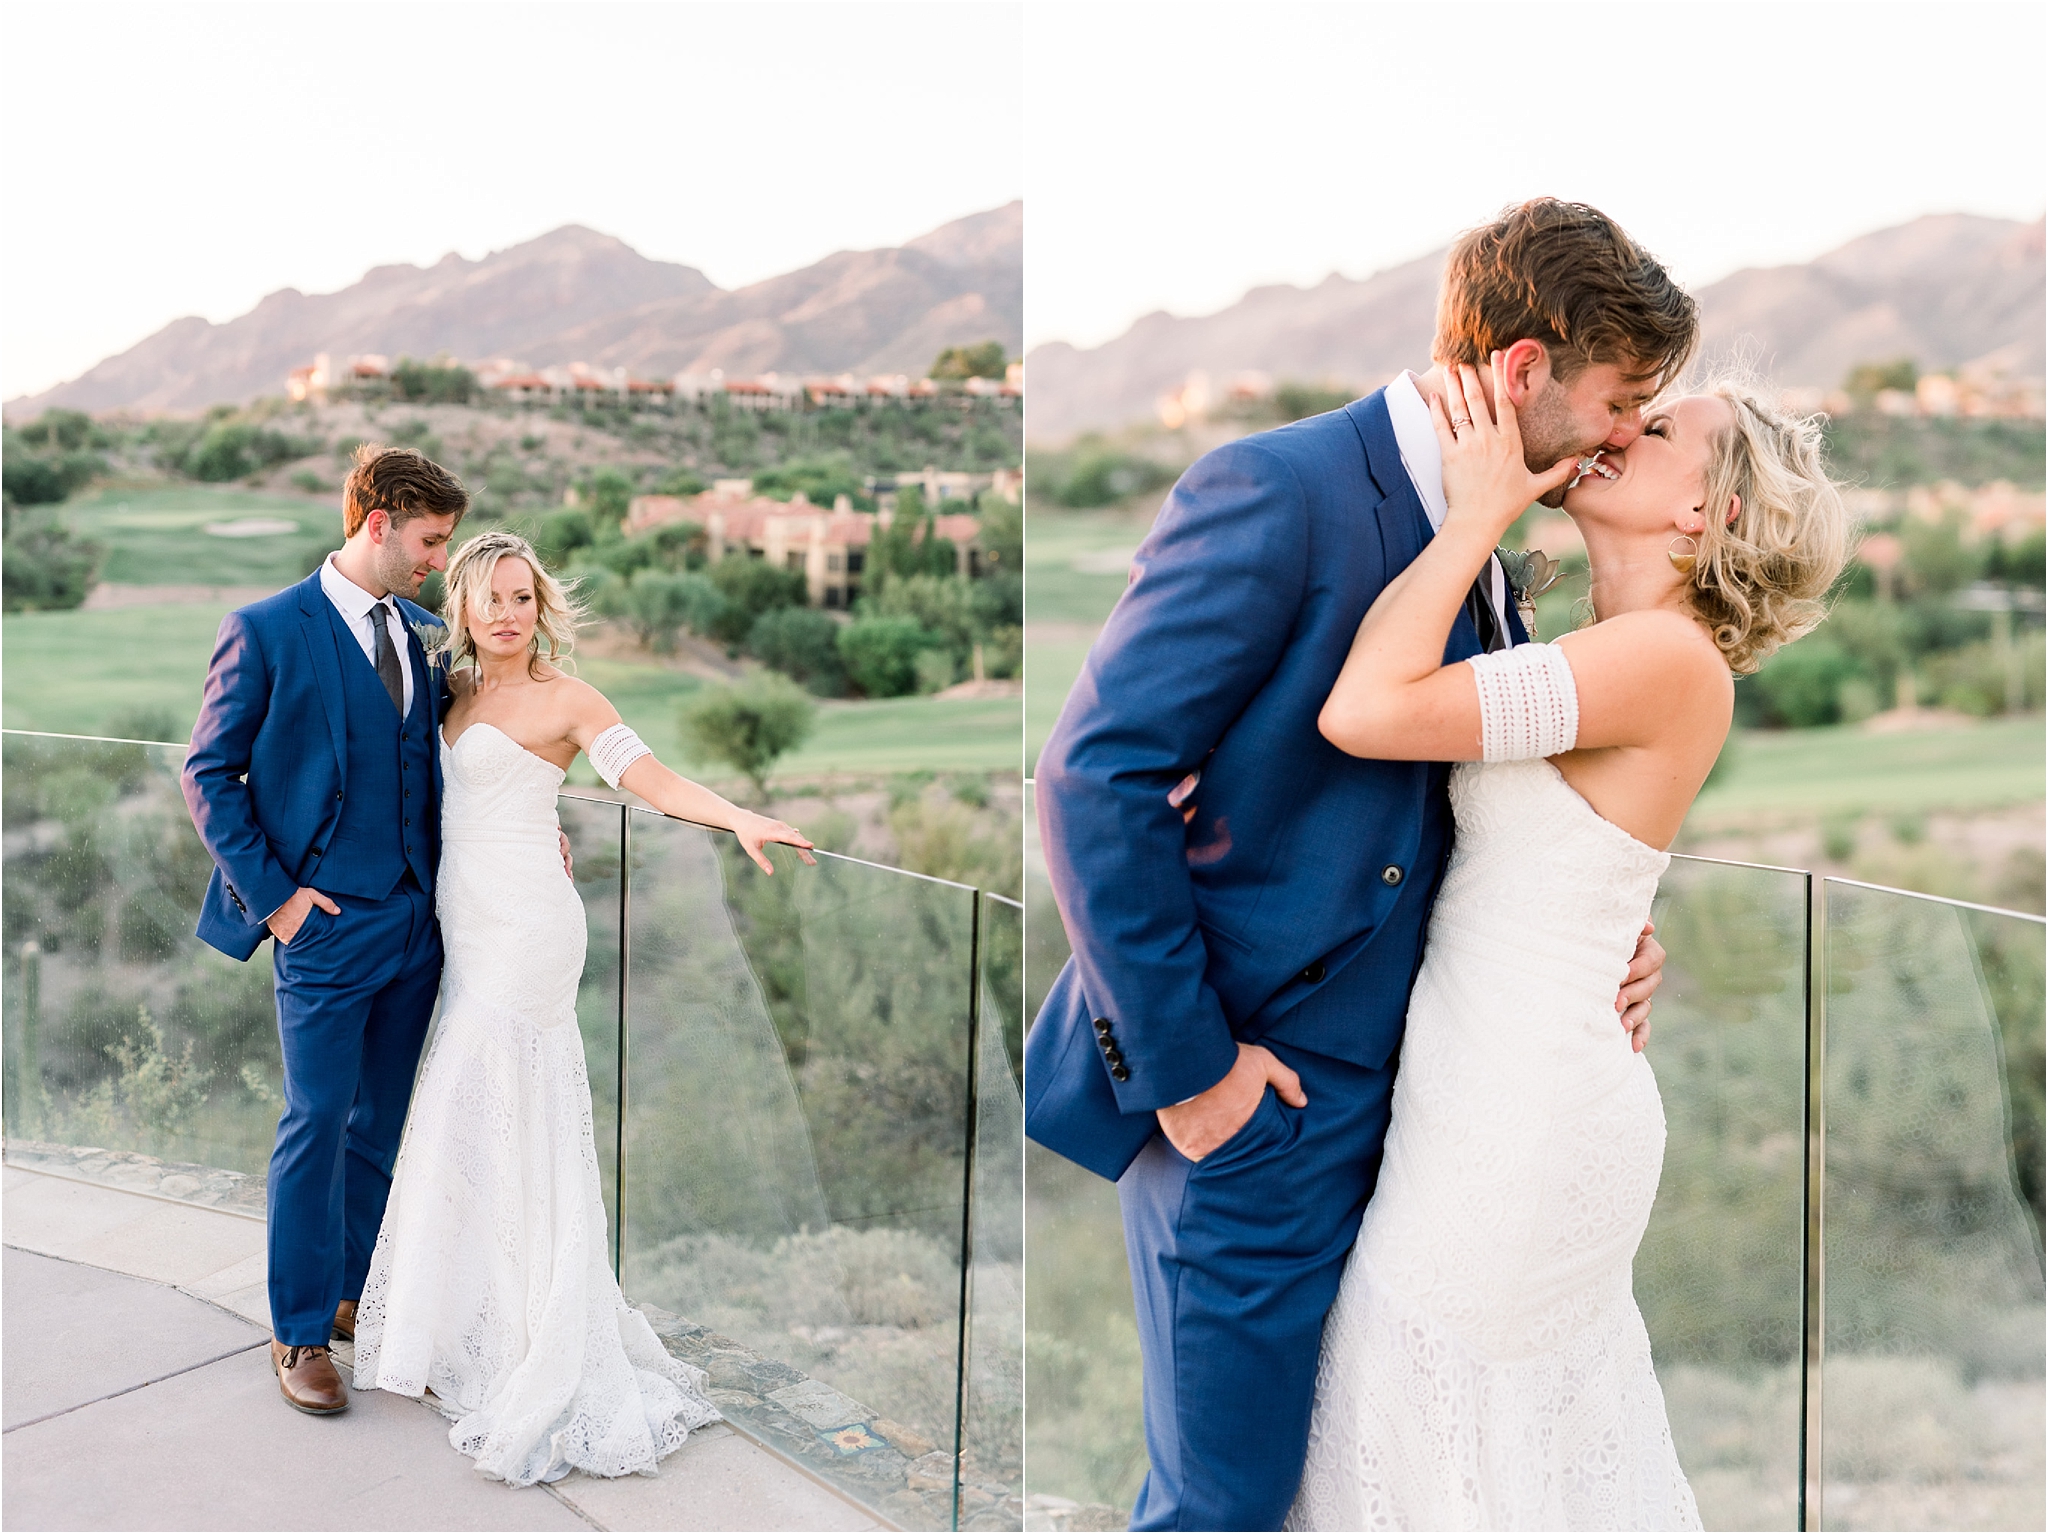 Hacienda Del Sol Wedding Tucson AZ Vanessa and Nate bride and groom portraits | West End Photography